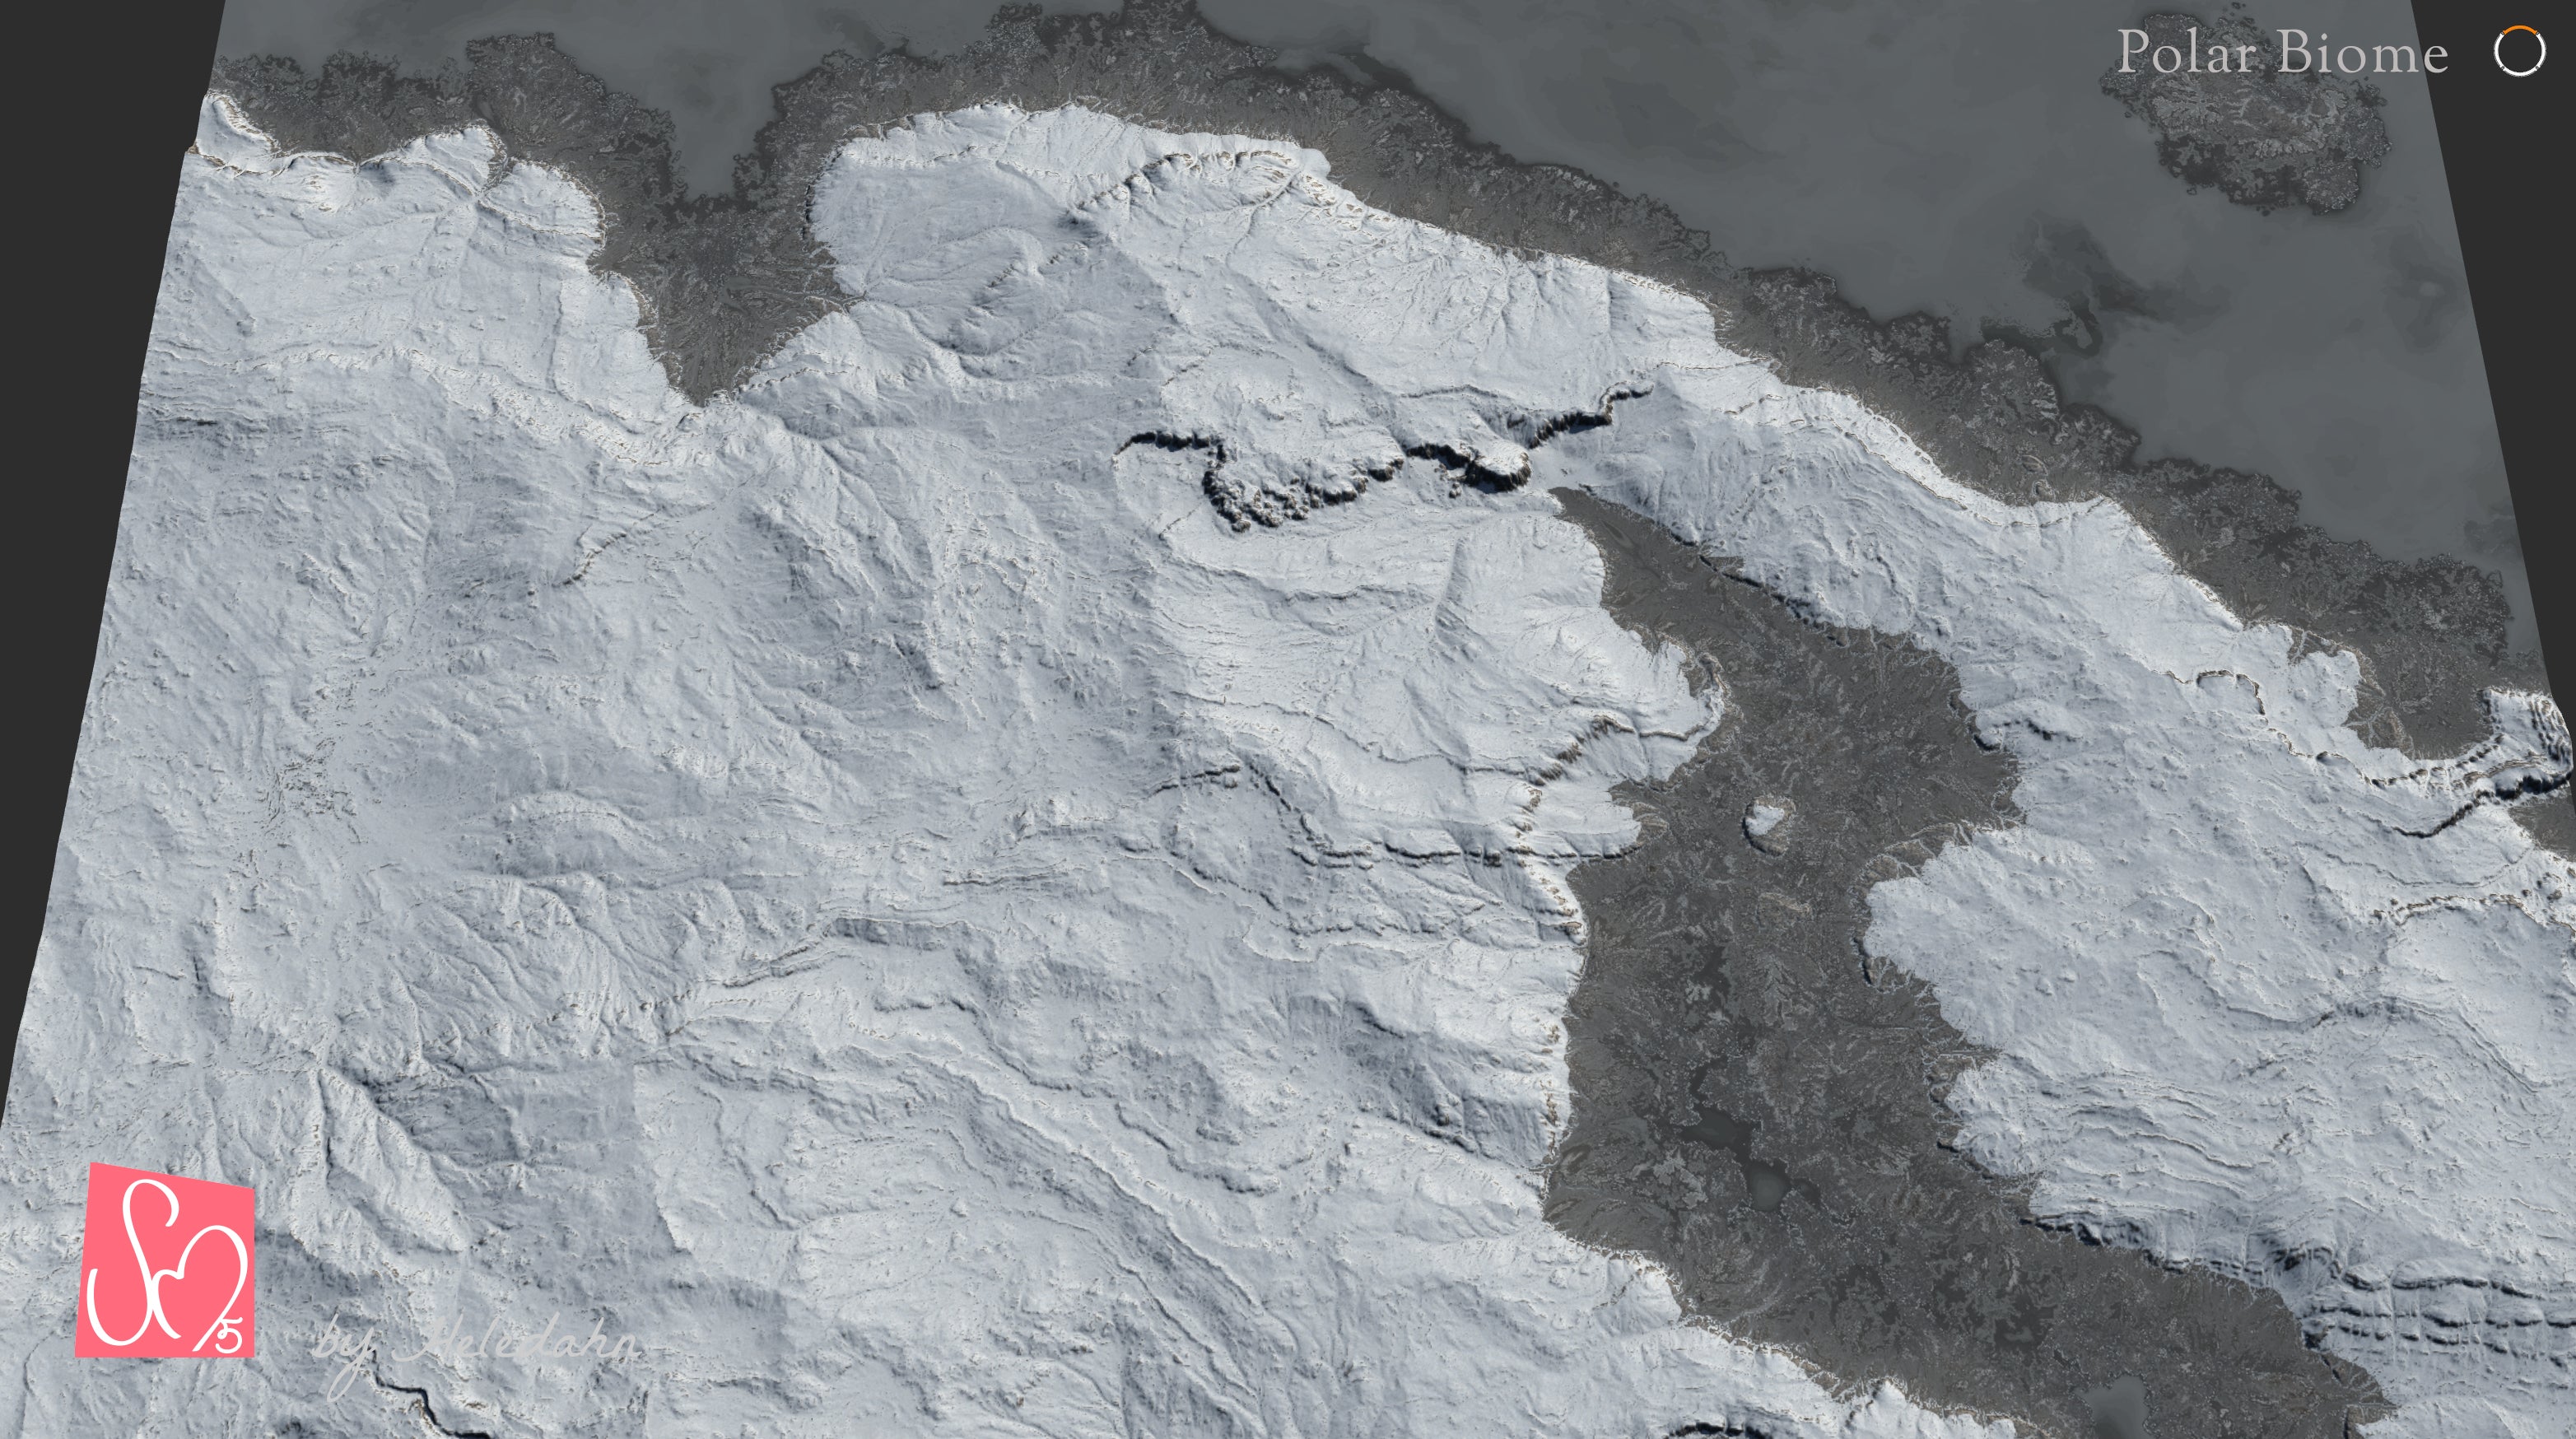 Gaea polar biome terrain 3D model by Heledahn